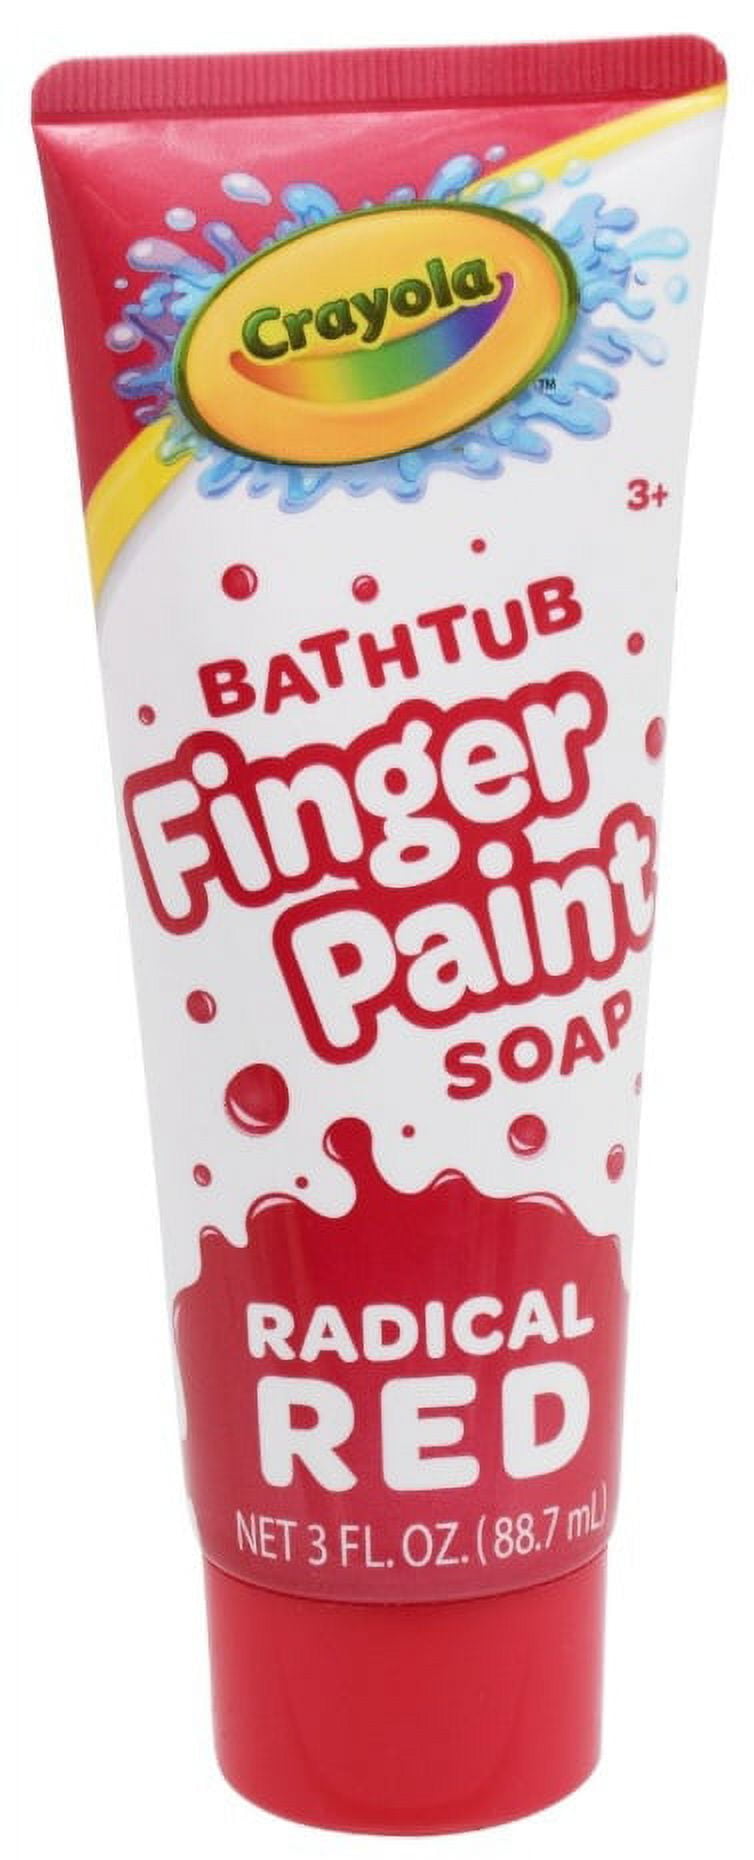 Crayola Bathtub Finger Paint Soap, 3 fl oz, Royal Purple